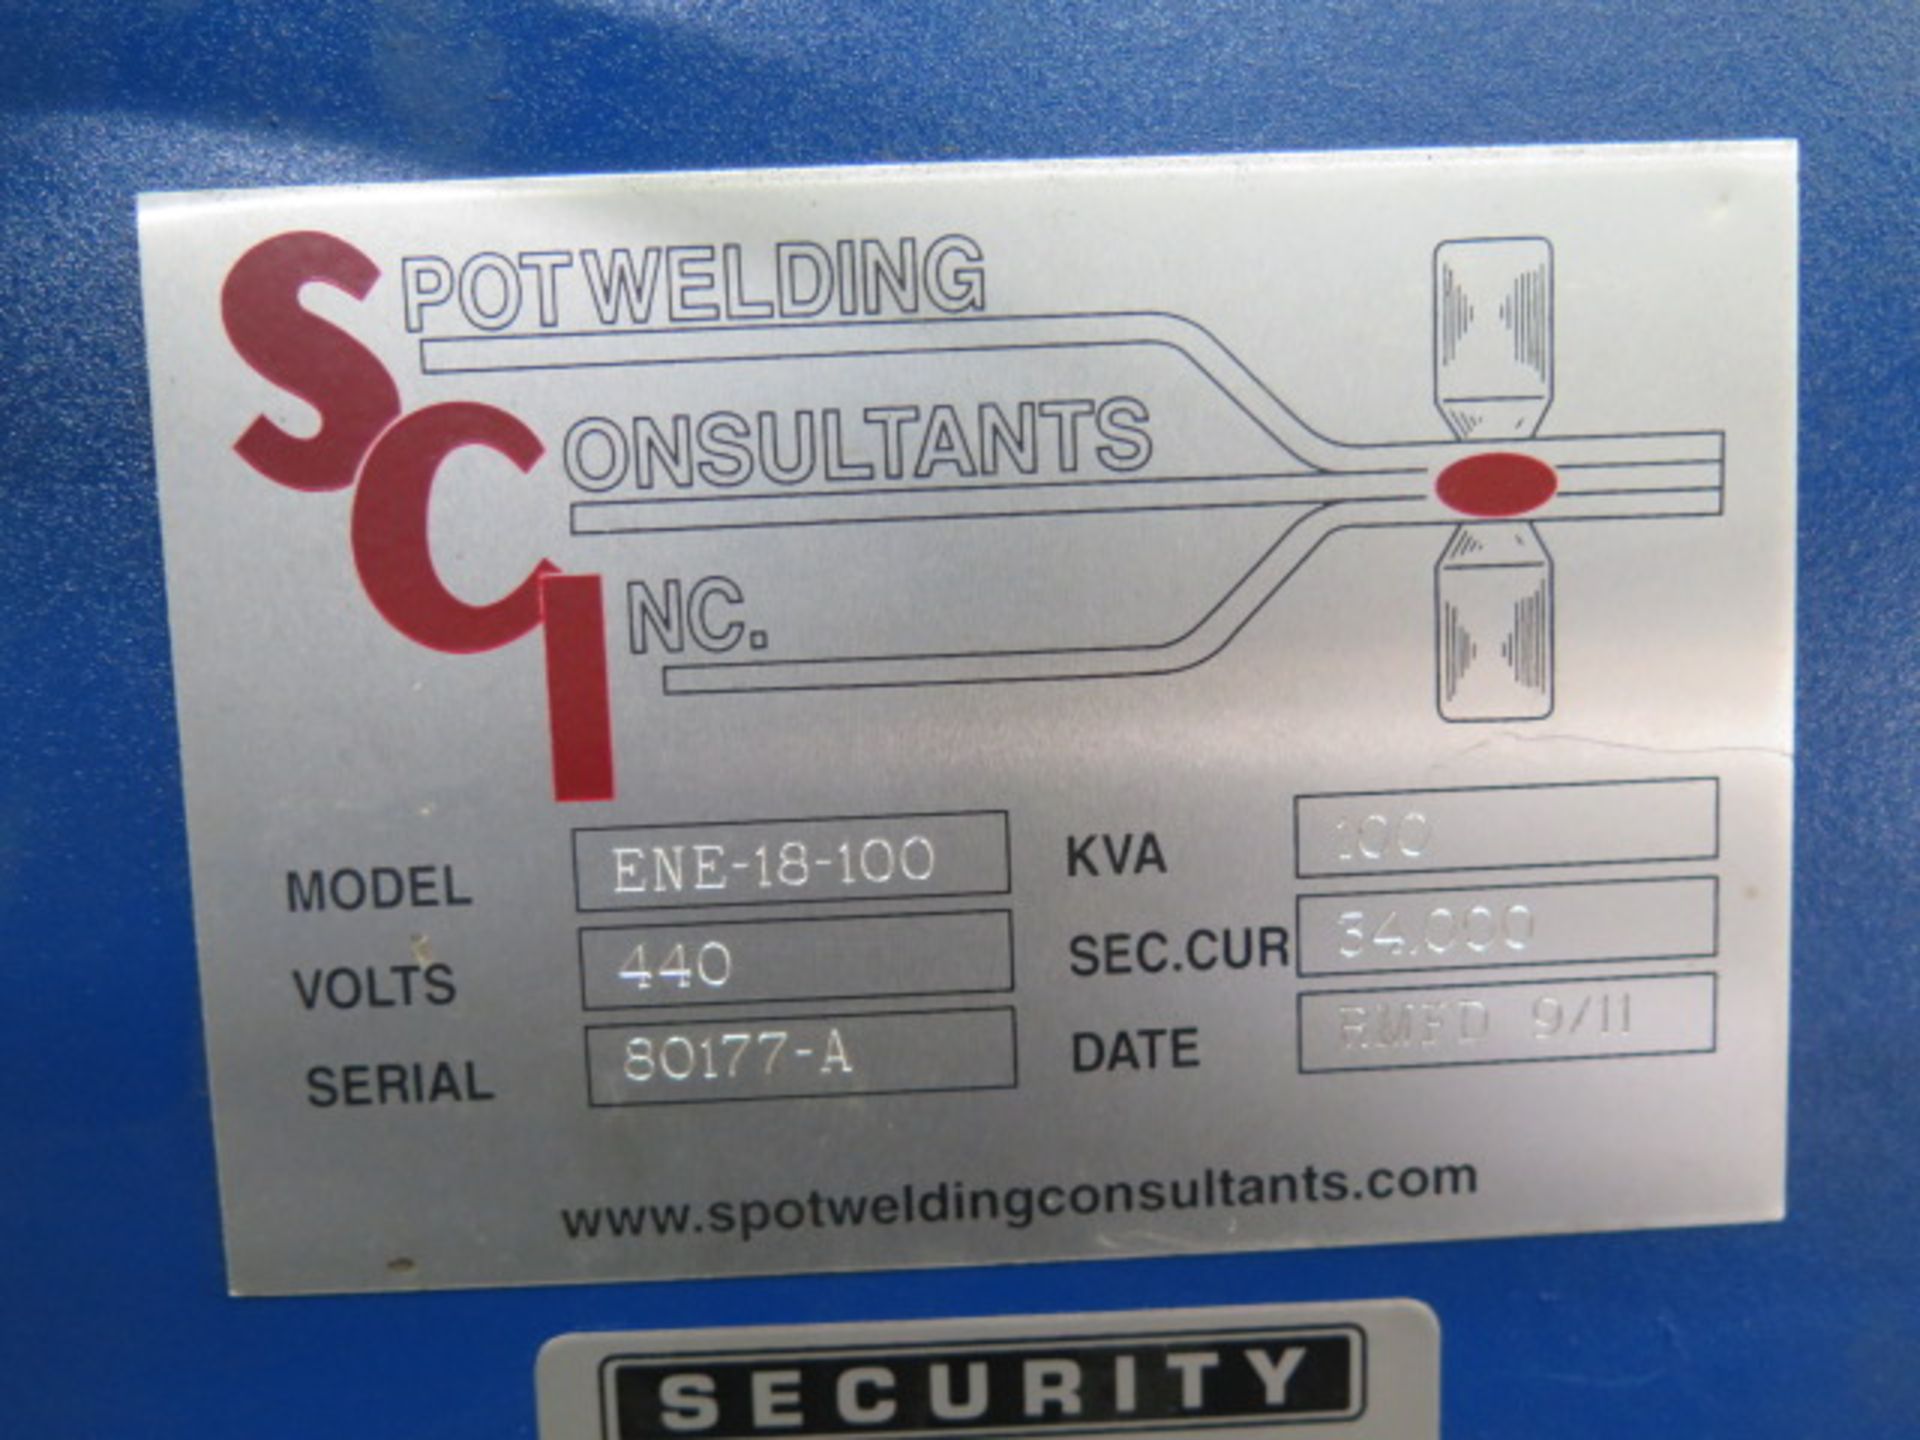 SCI Spot Welding Consultants Type ENE-18-100 100kVA x 18” Spot Welder s/n 80177-A w/ Pneumatic Ram - Image 7 of 7